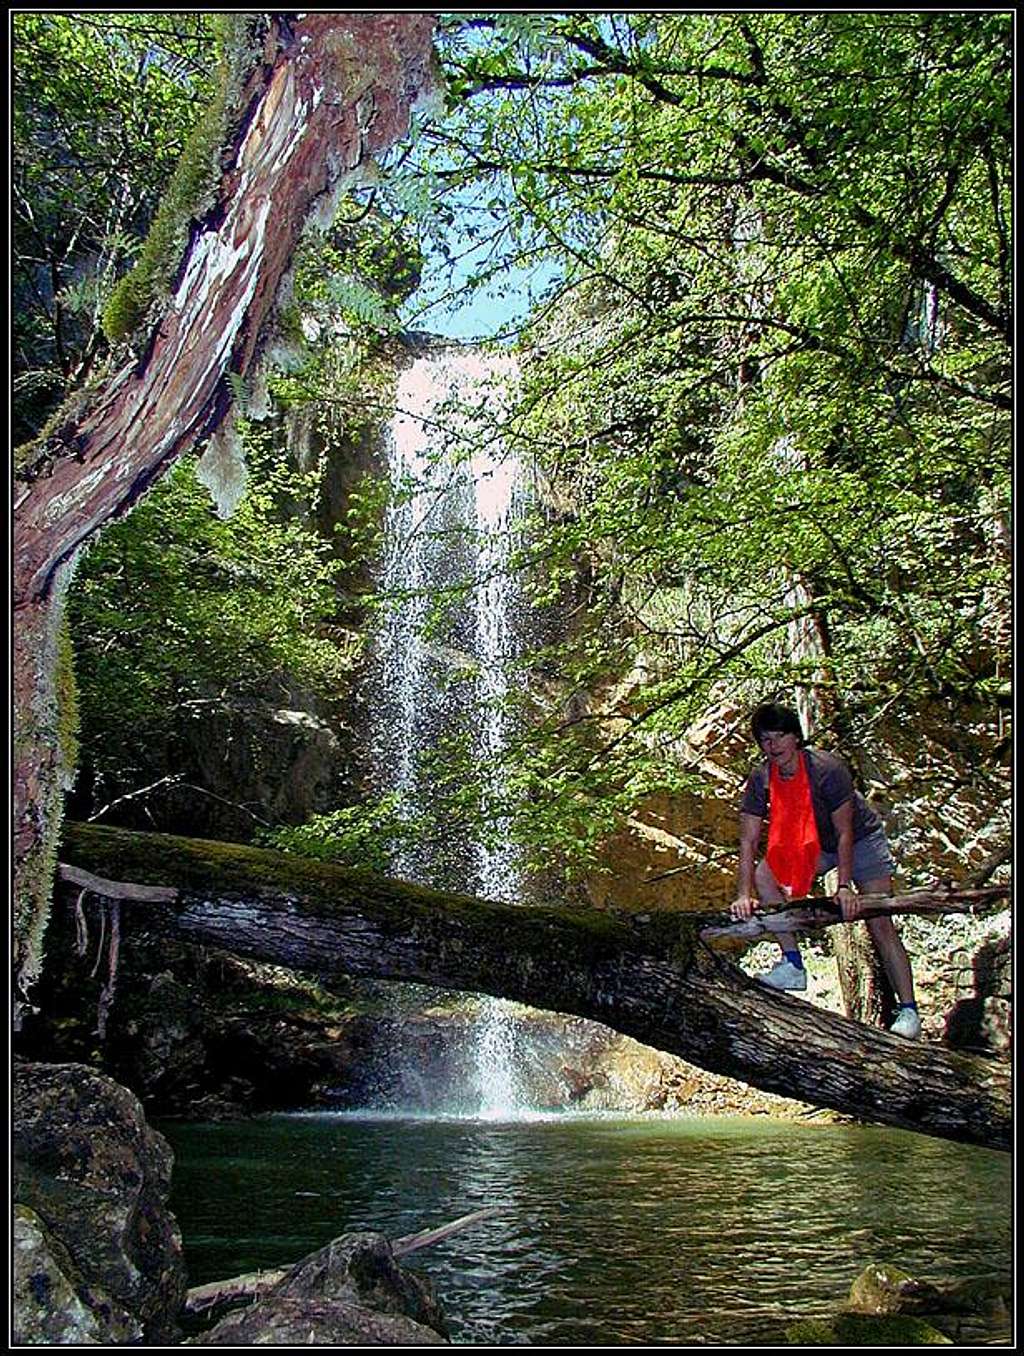 The waterfall near Sterna